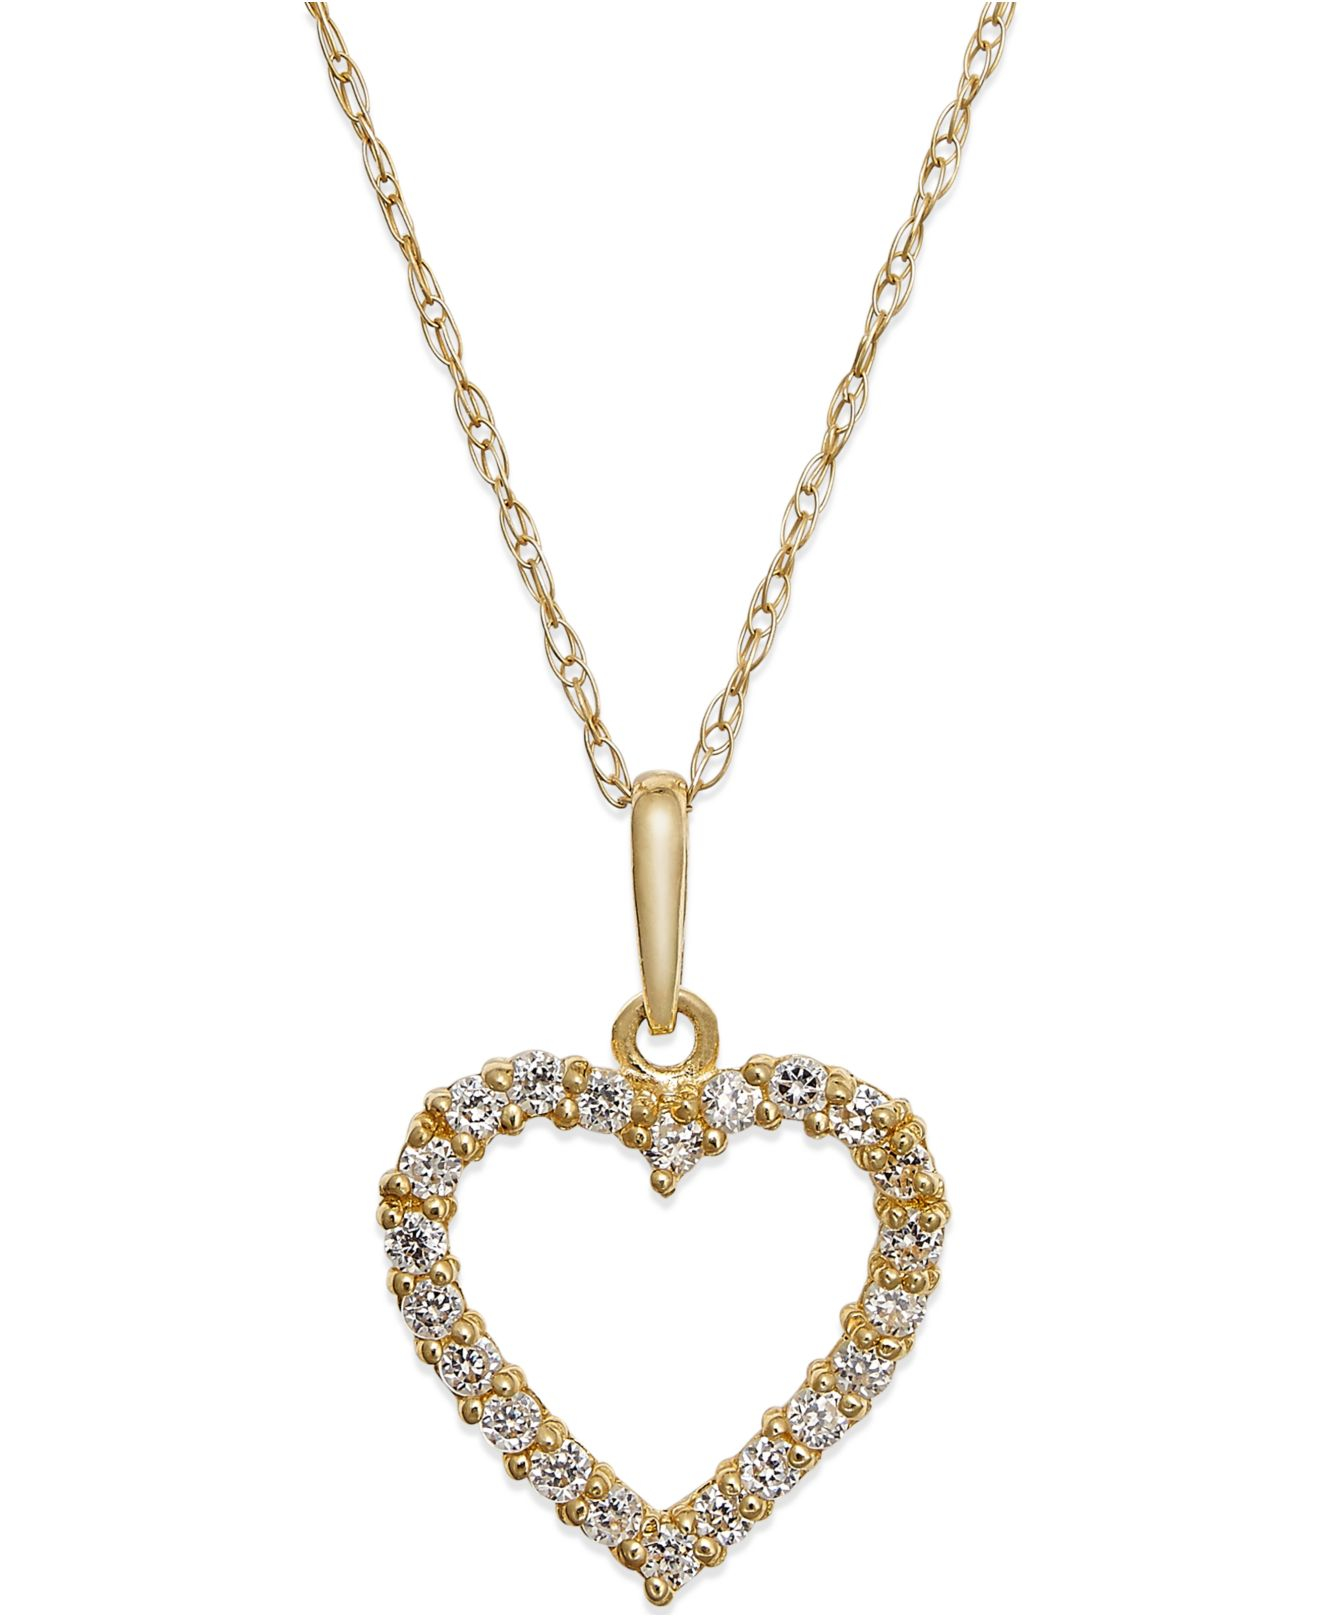  Macy s  Cubic Zirconia Heart Pendant Necklace In 10k Gold 